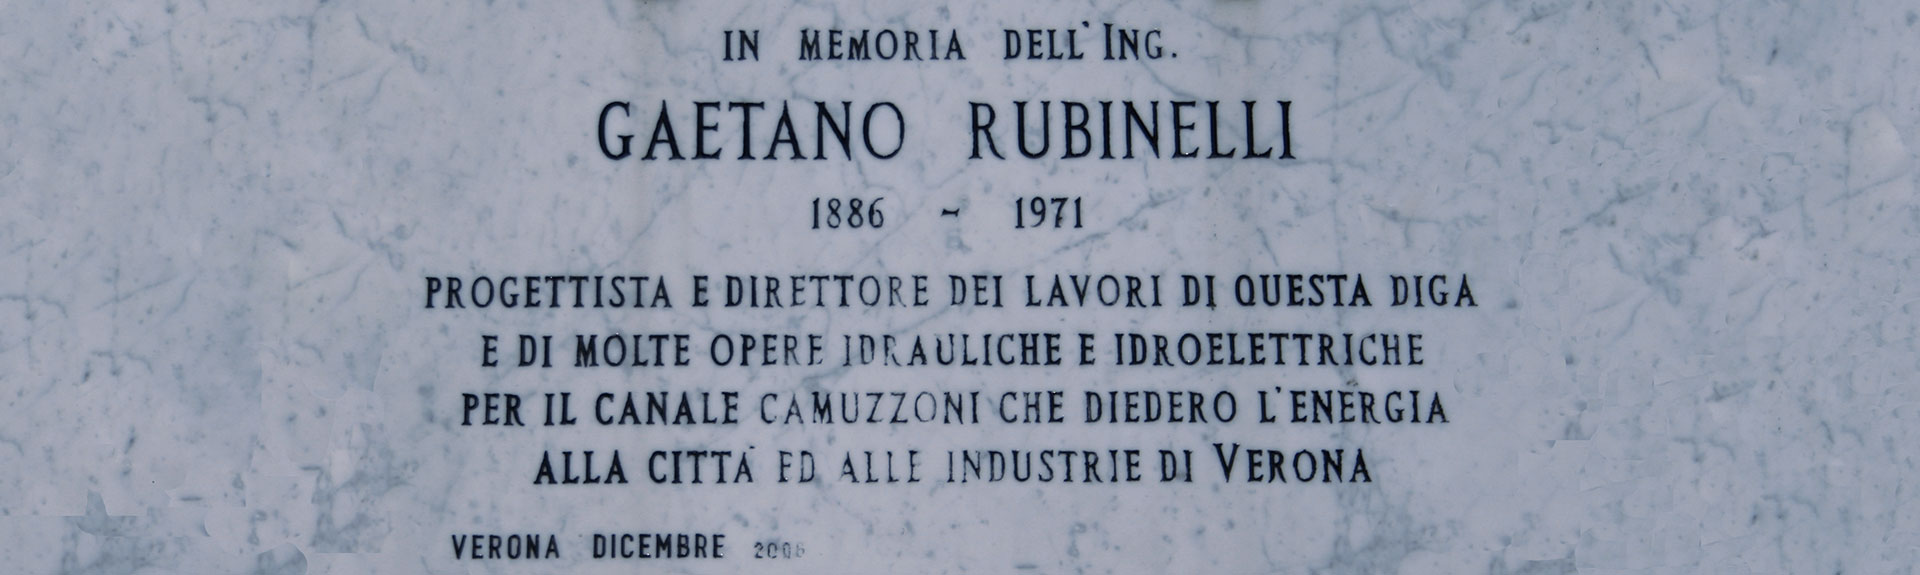 Rubinelli Vajol - Geschichte